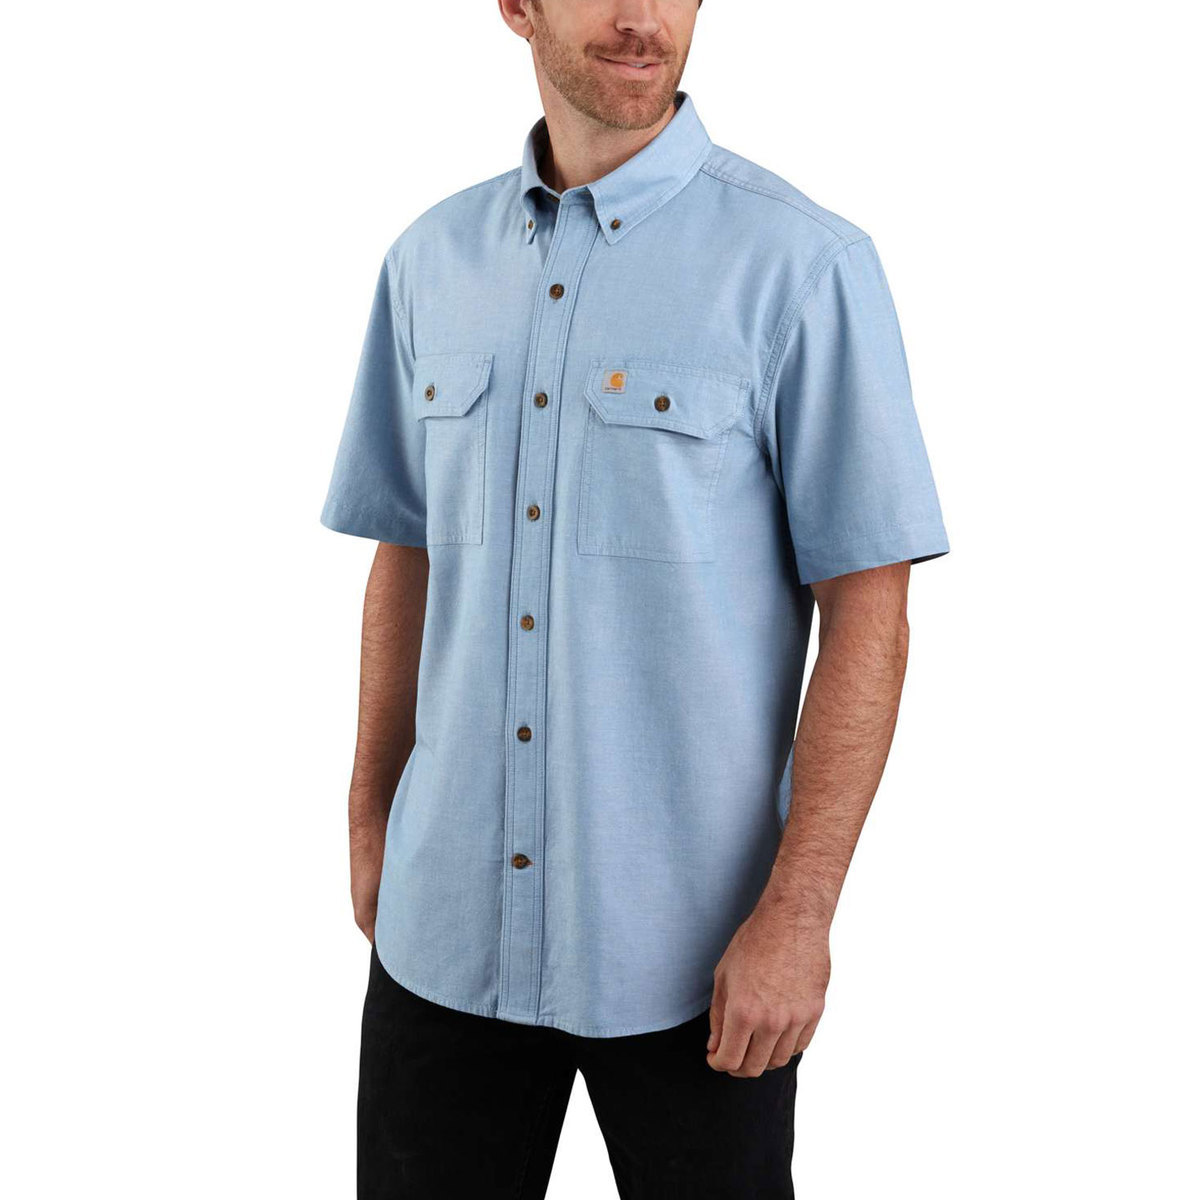 Carhartt Men's Original Fit Solid Short Sleeve Shirt - Blue Chambray ...